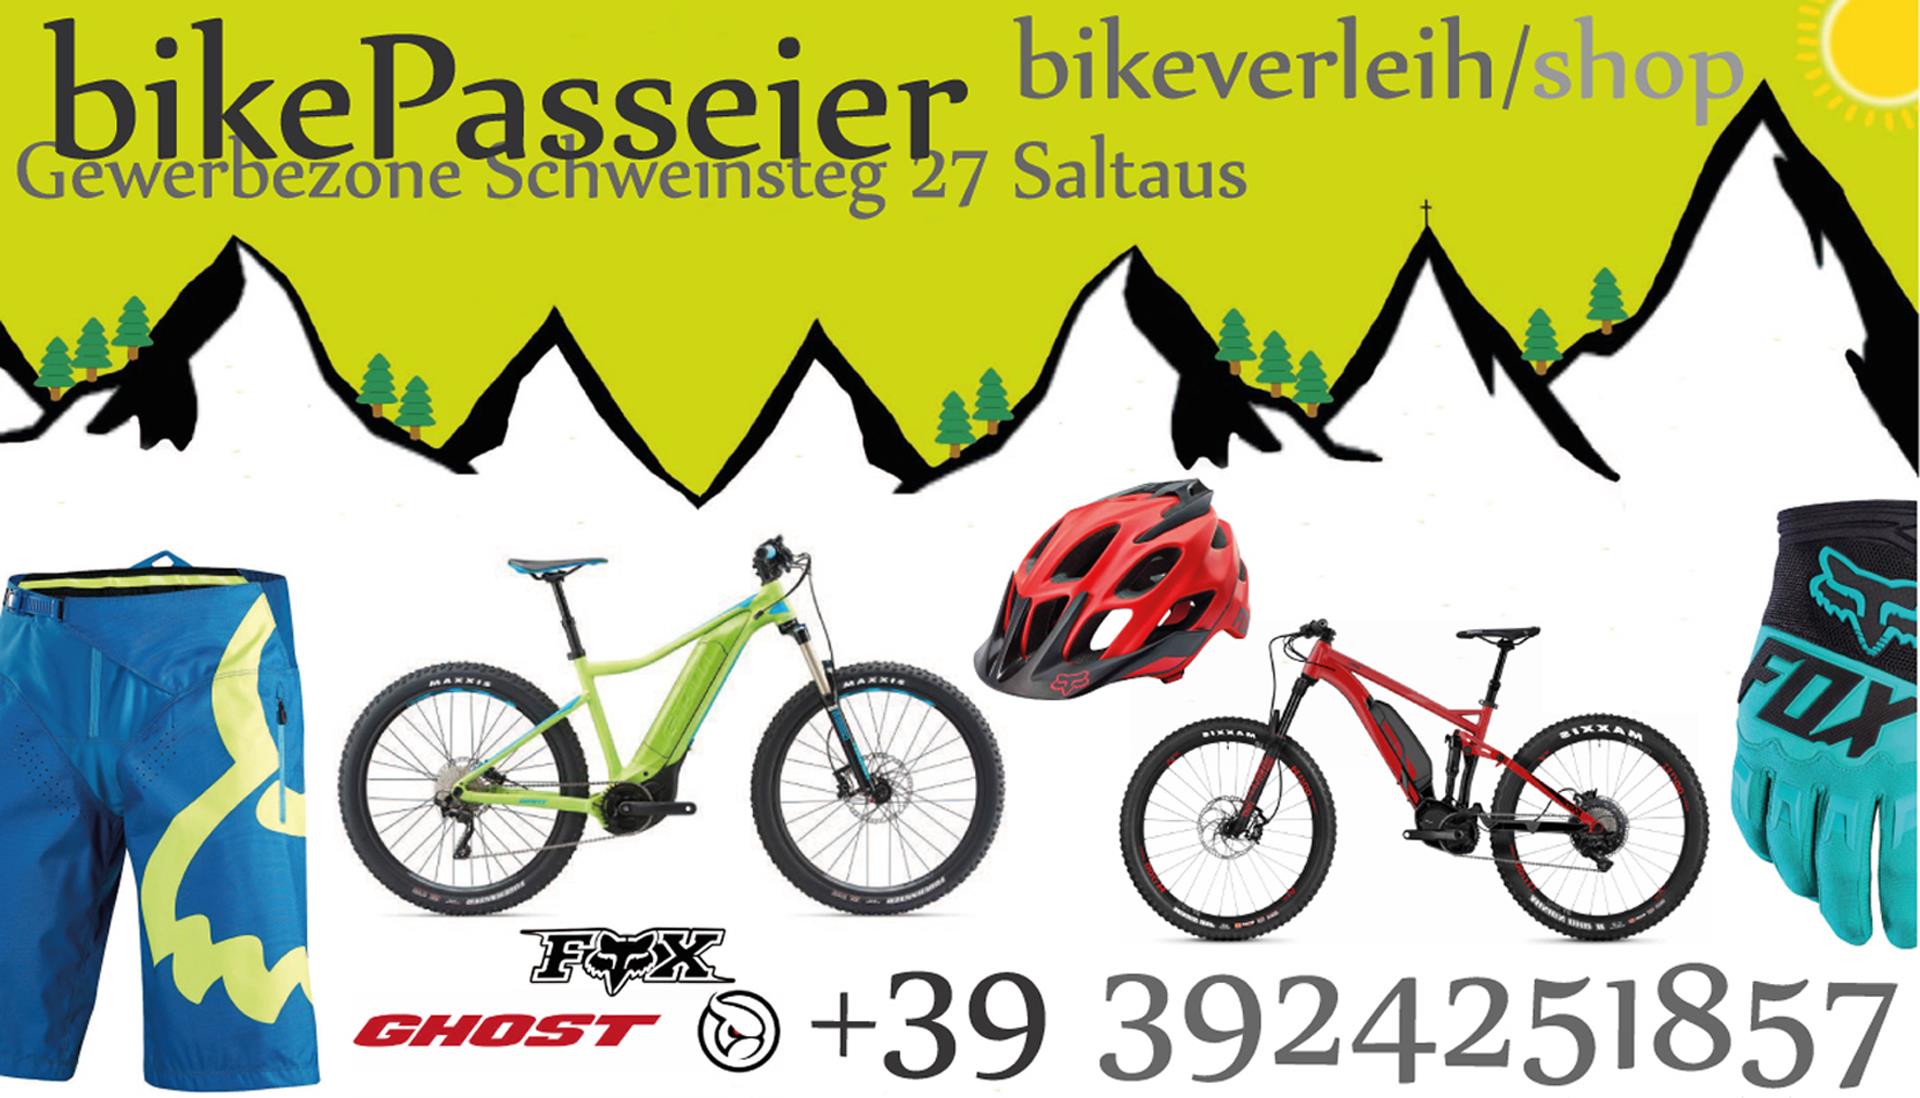 Bike Passeier noleggio bici e shop